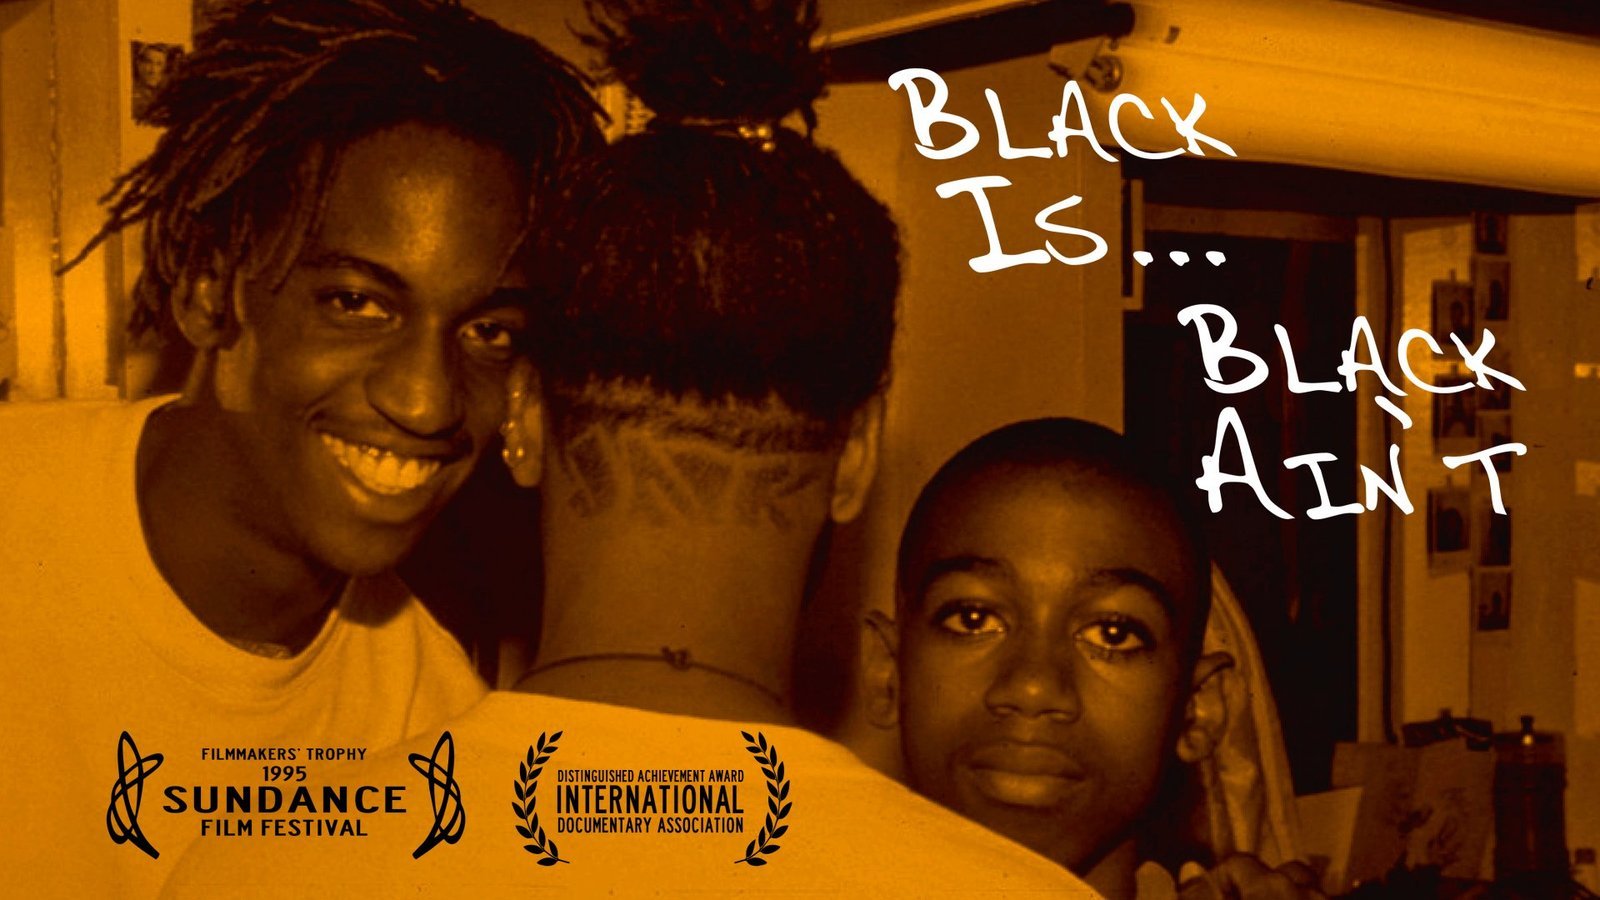 black is black aint movie poster